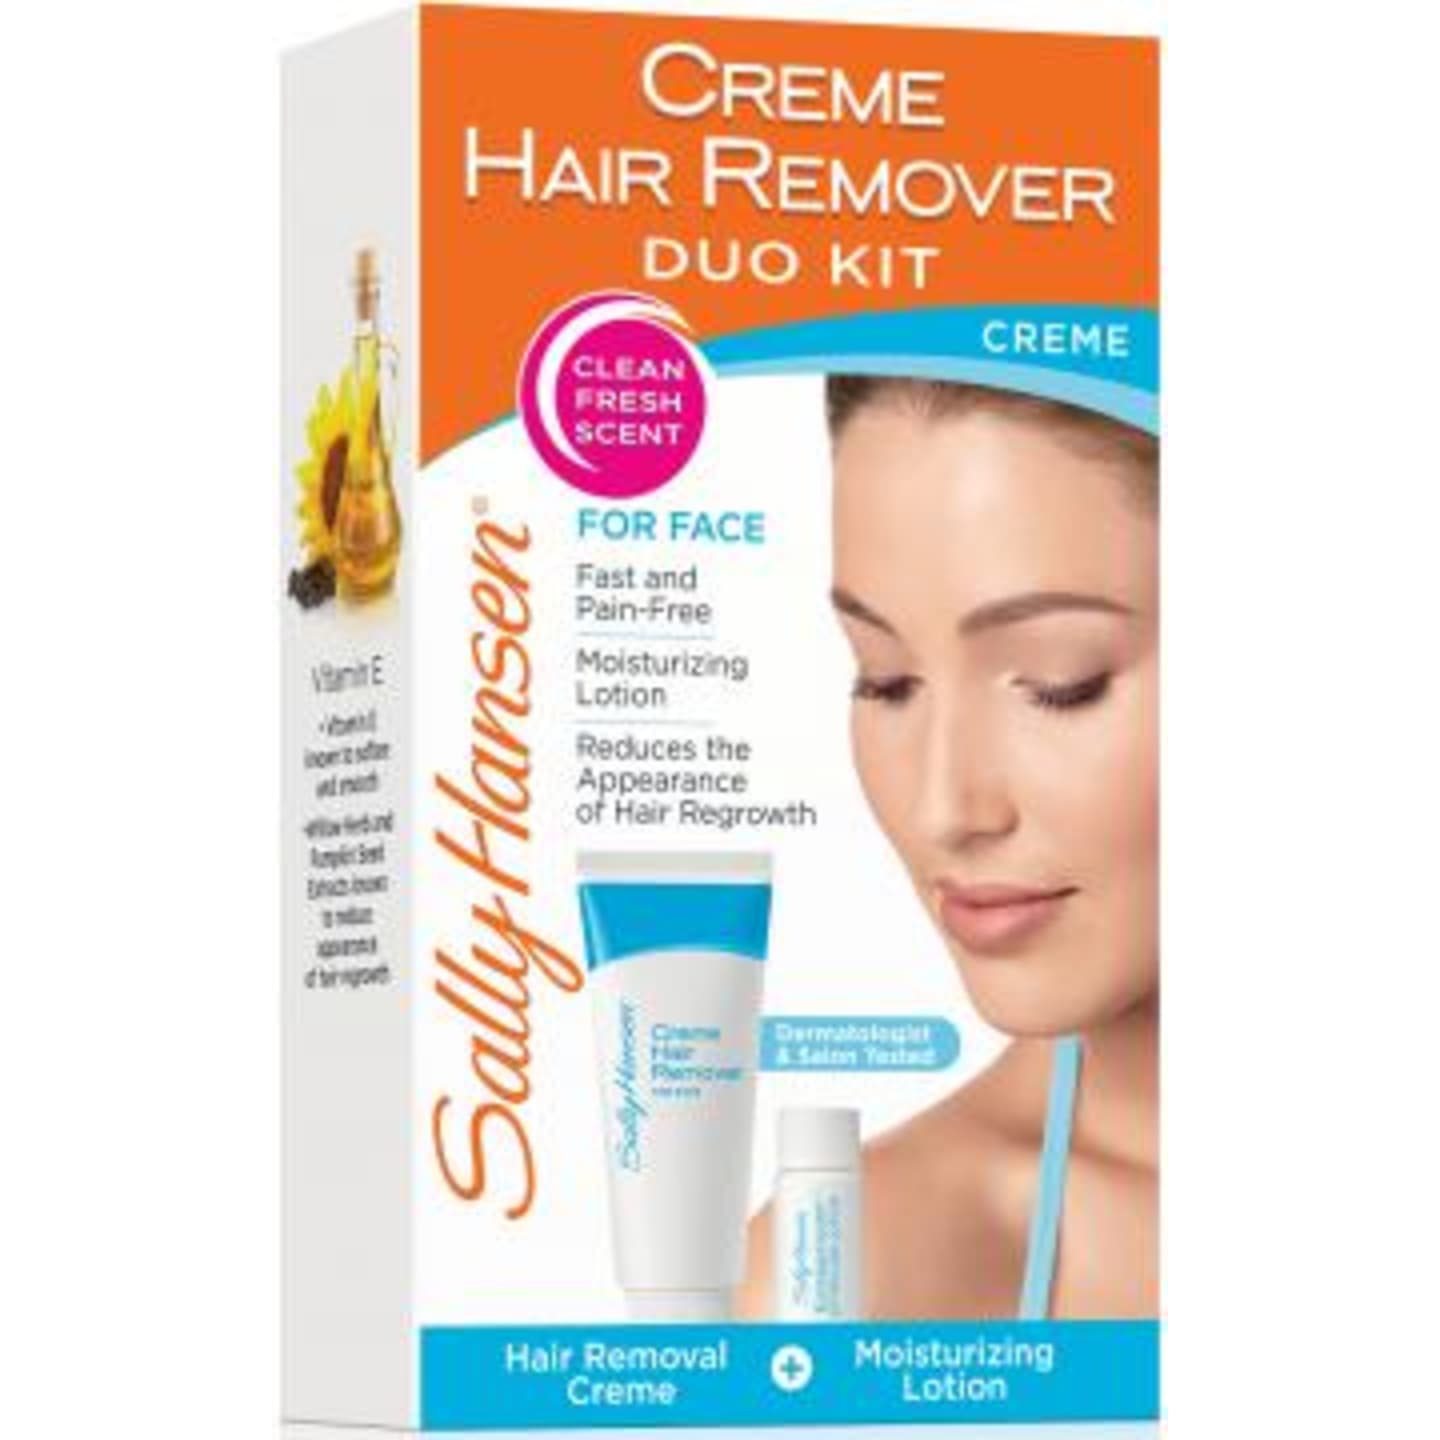 Sally Hansen Creme Hair Remover Duo Kit